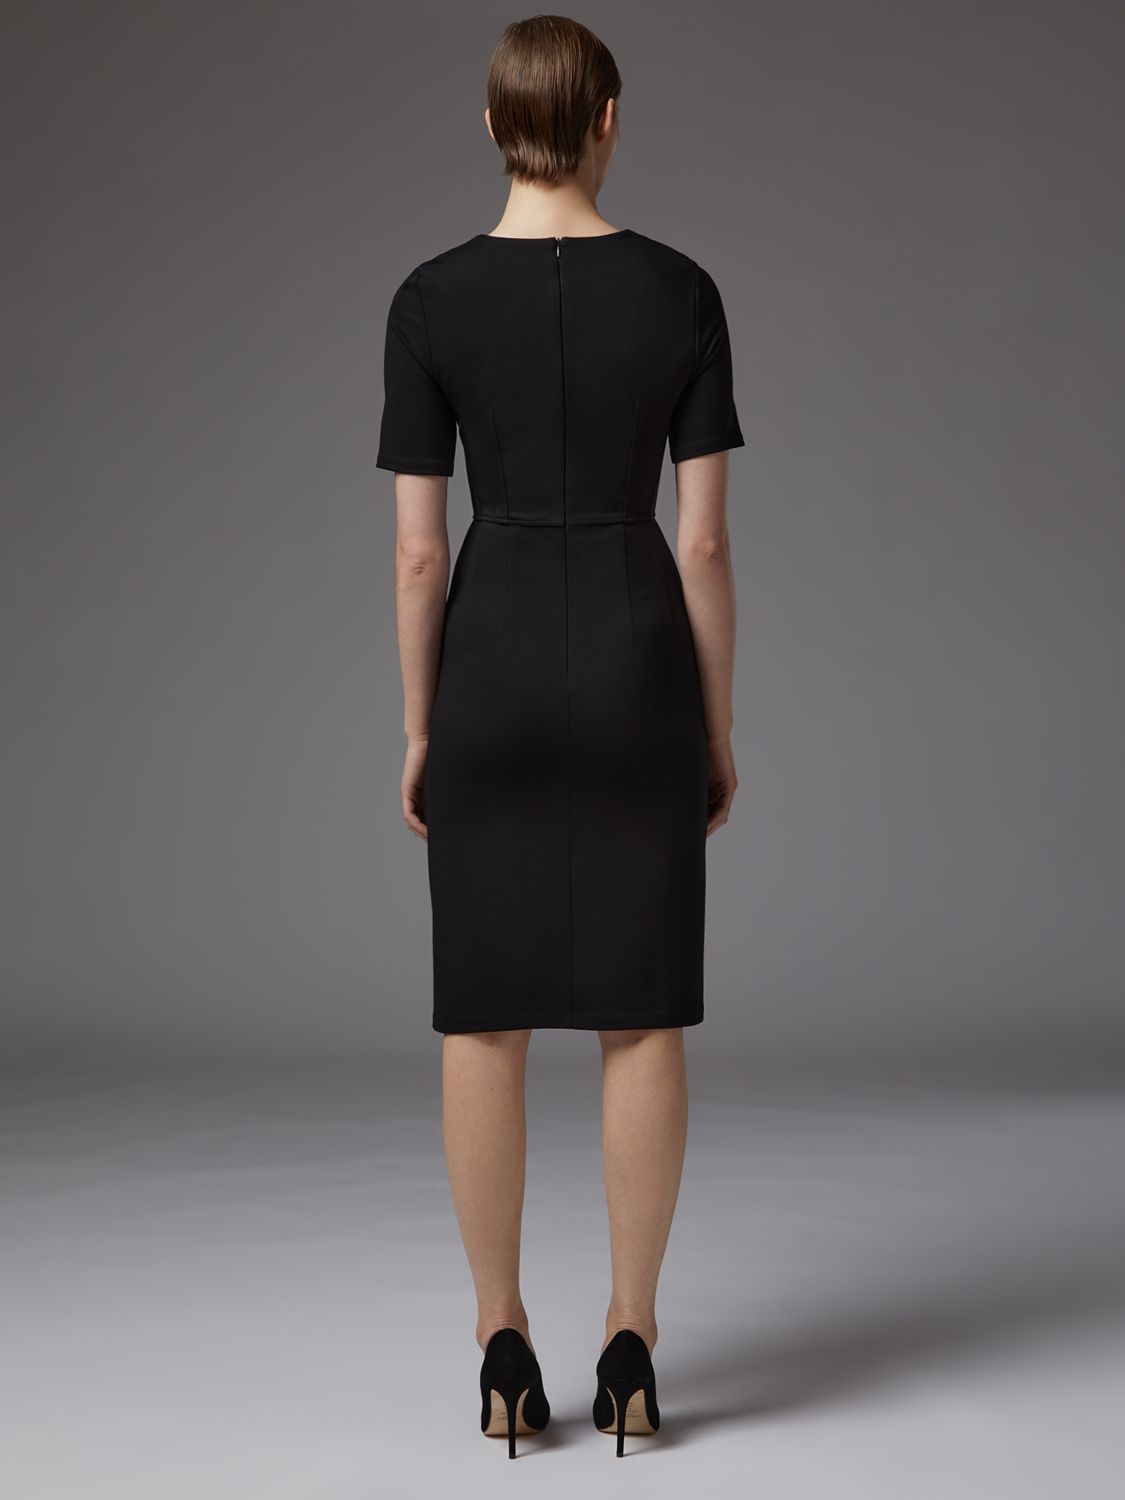 L.K.Bennett Natasha Shift Dress, Black at John Lewis & Partners